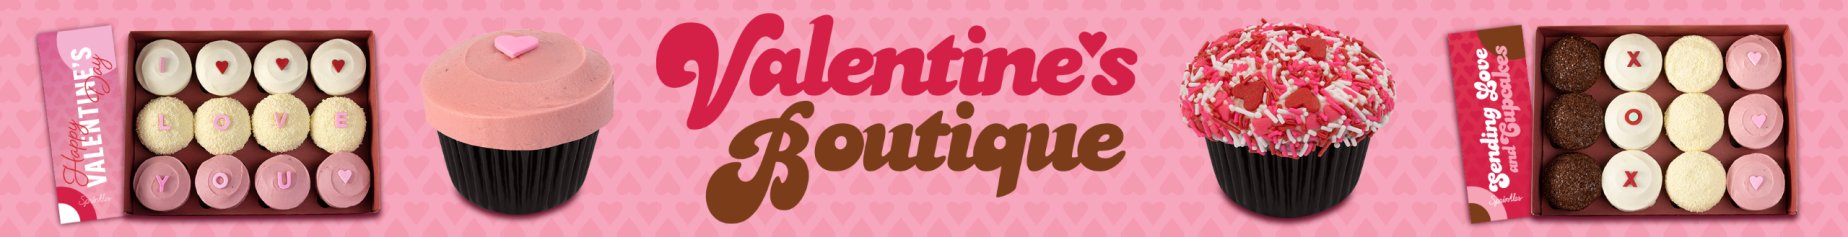 Valentine's Boutique – Sprinkles Cupcakes, Inc